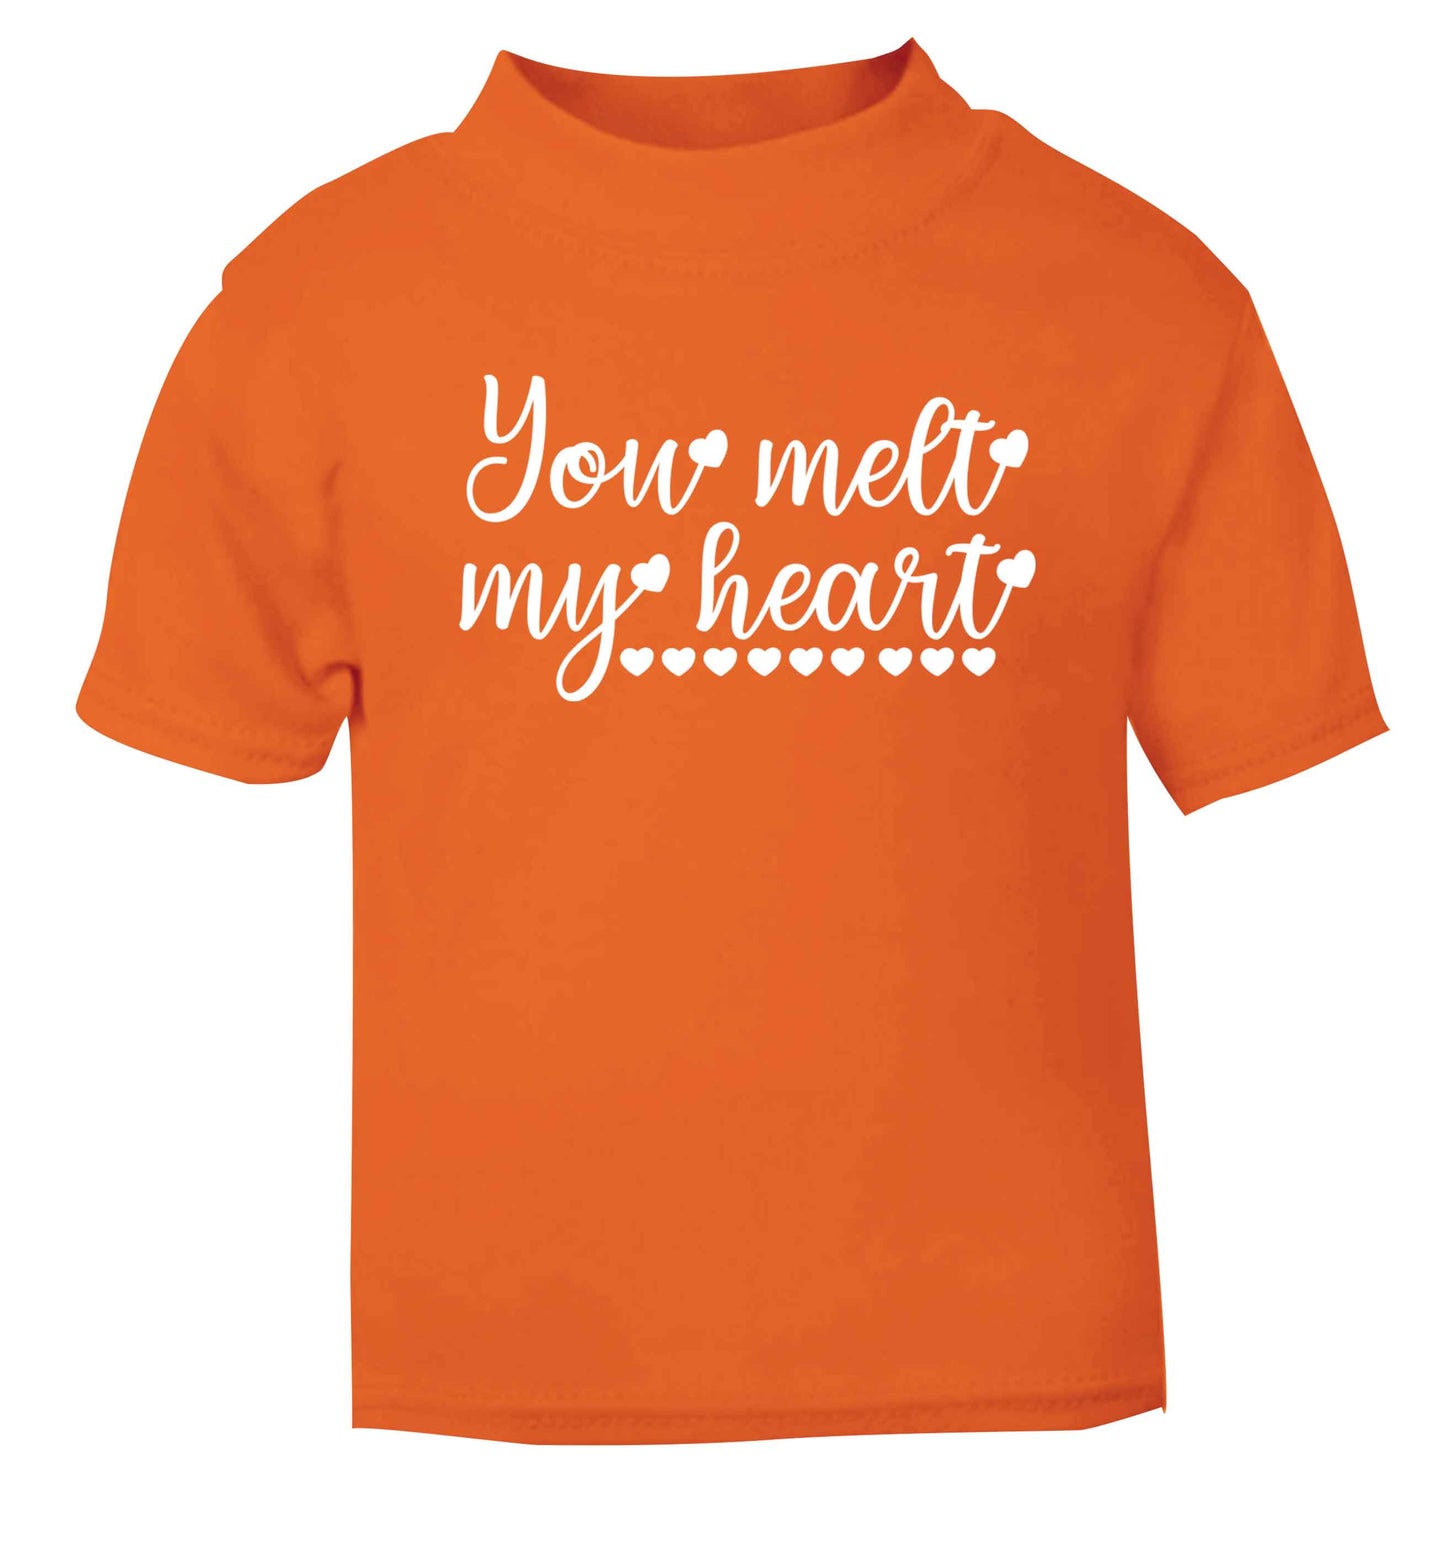 You melt my heart orange baby toddler Tshirt 2 Years